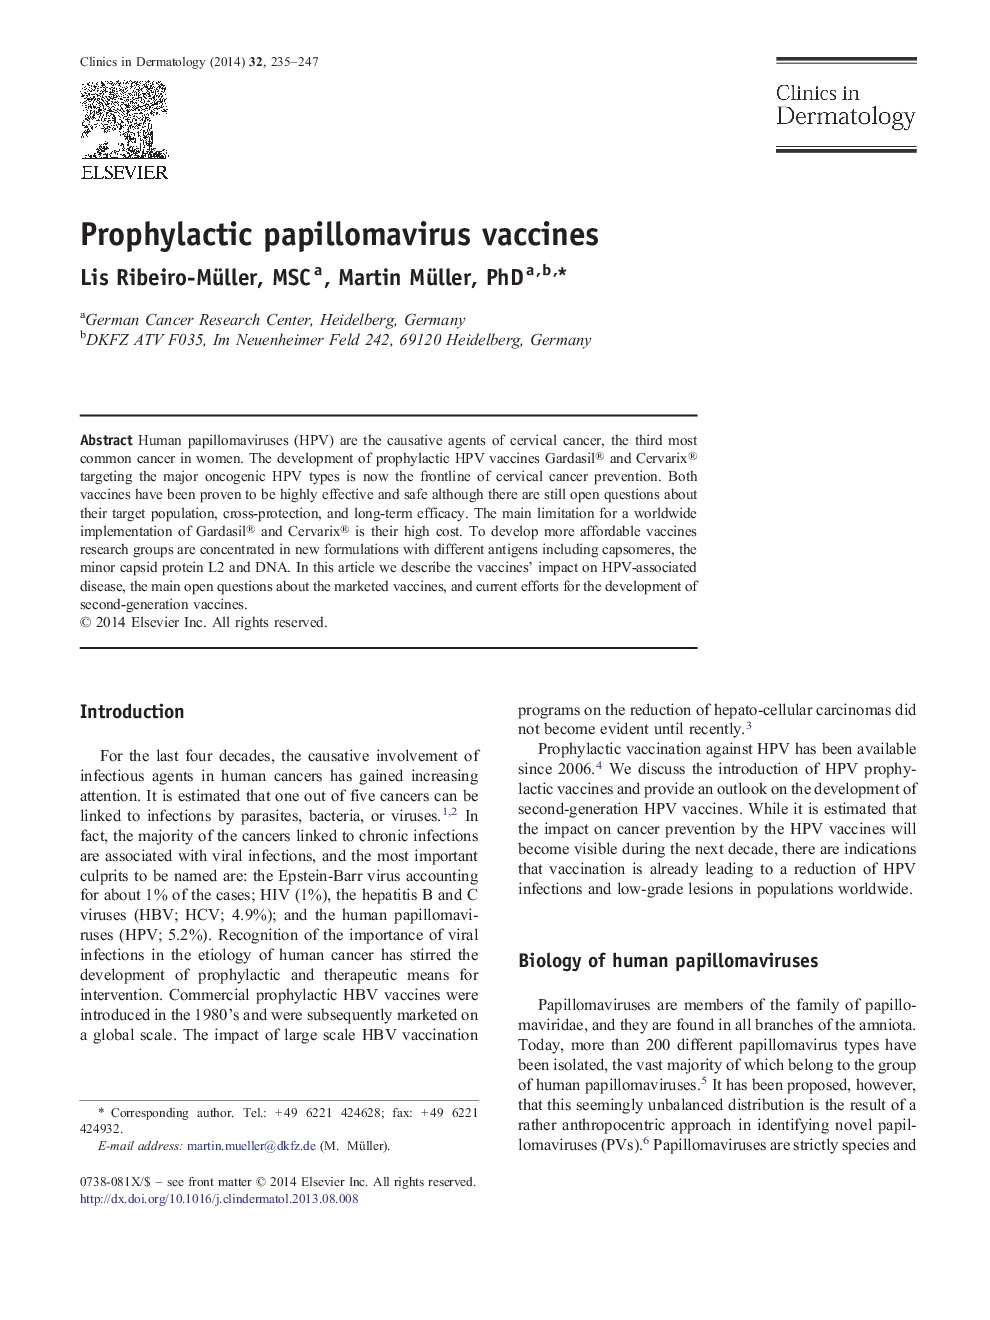 Prophylactic papillomavirus vaccines